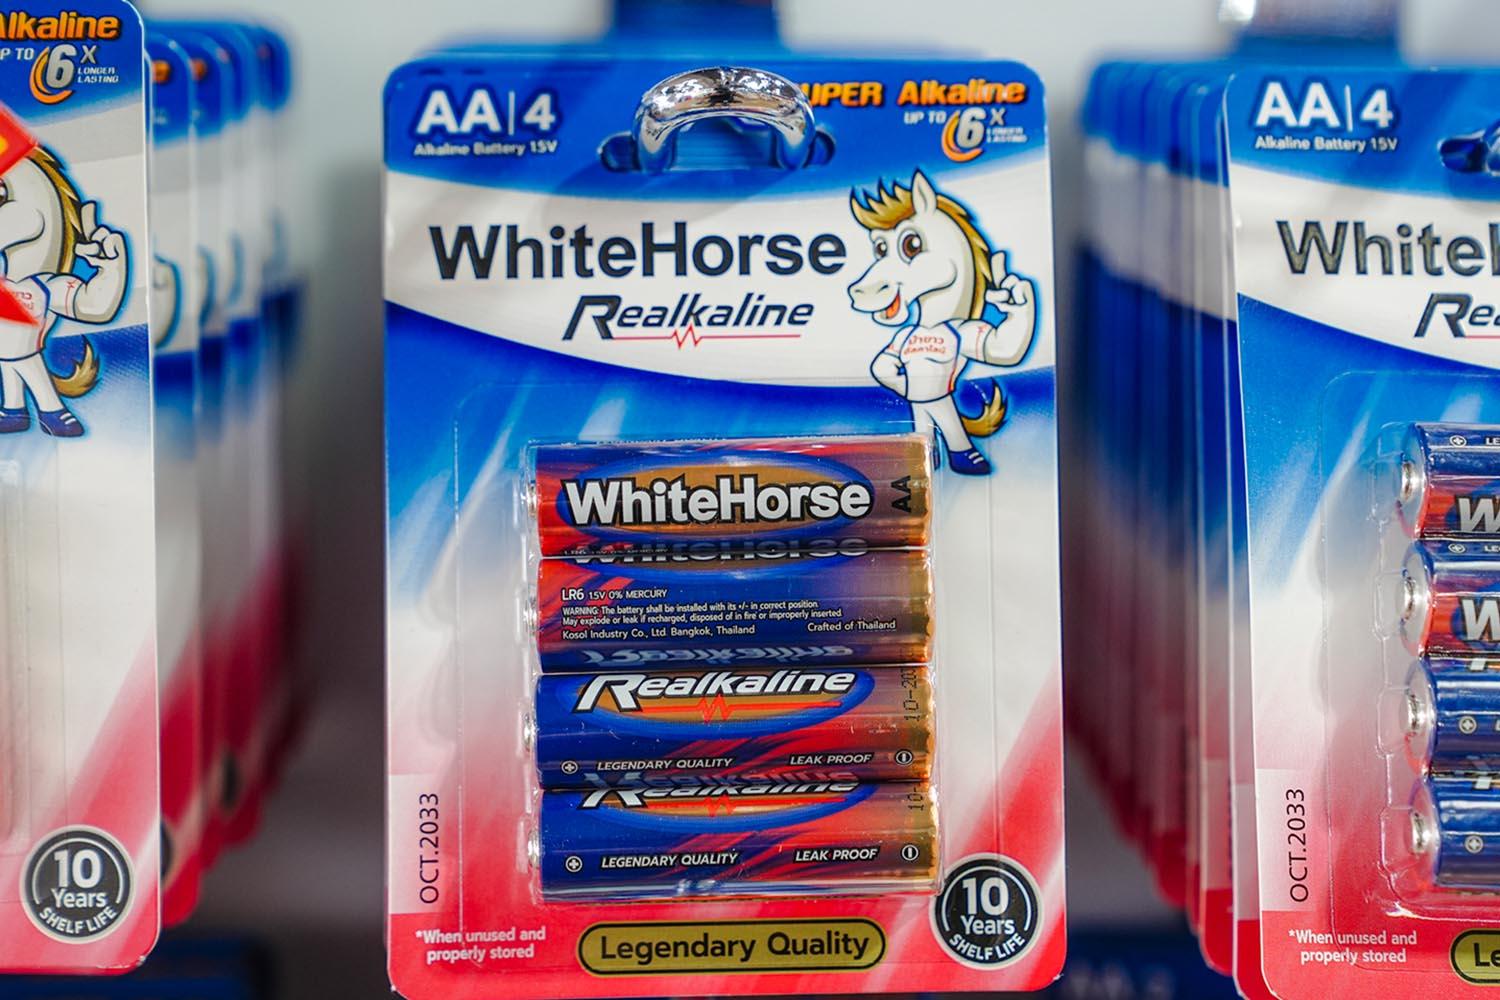 Economy-White-Horse-brand-flashlight-batteries-Invading-modern-trade-hoping-to-grow-20-percent-SPACEBAR-Hero.jpg